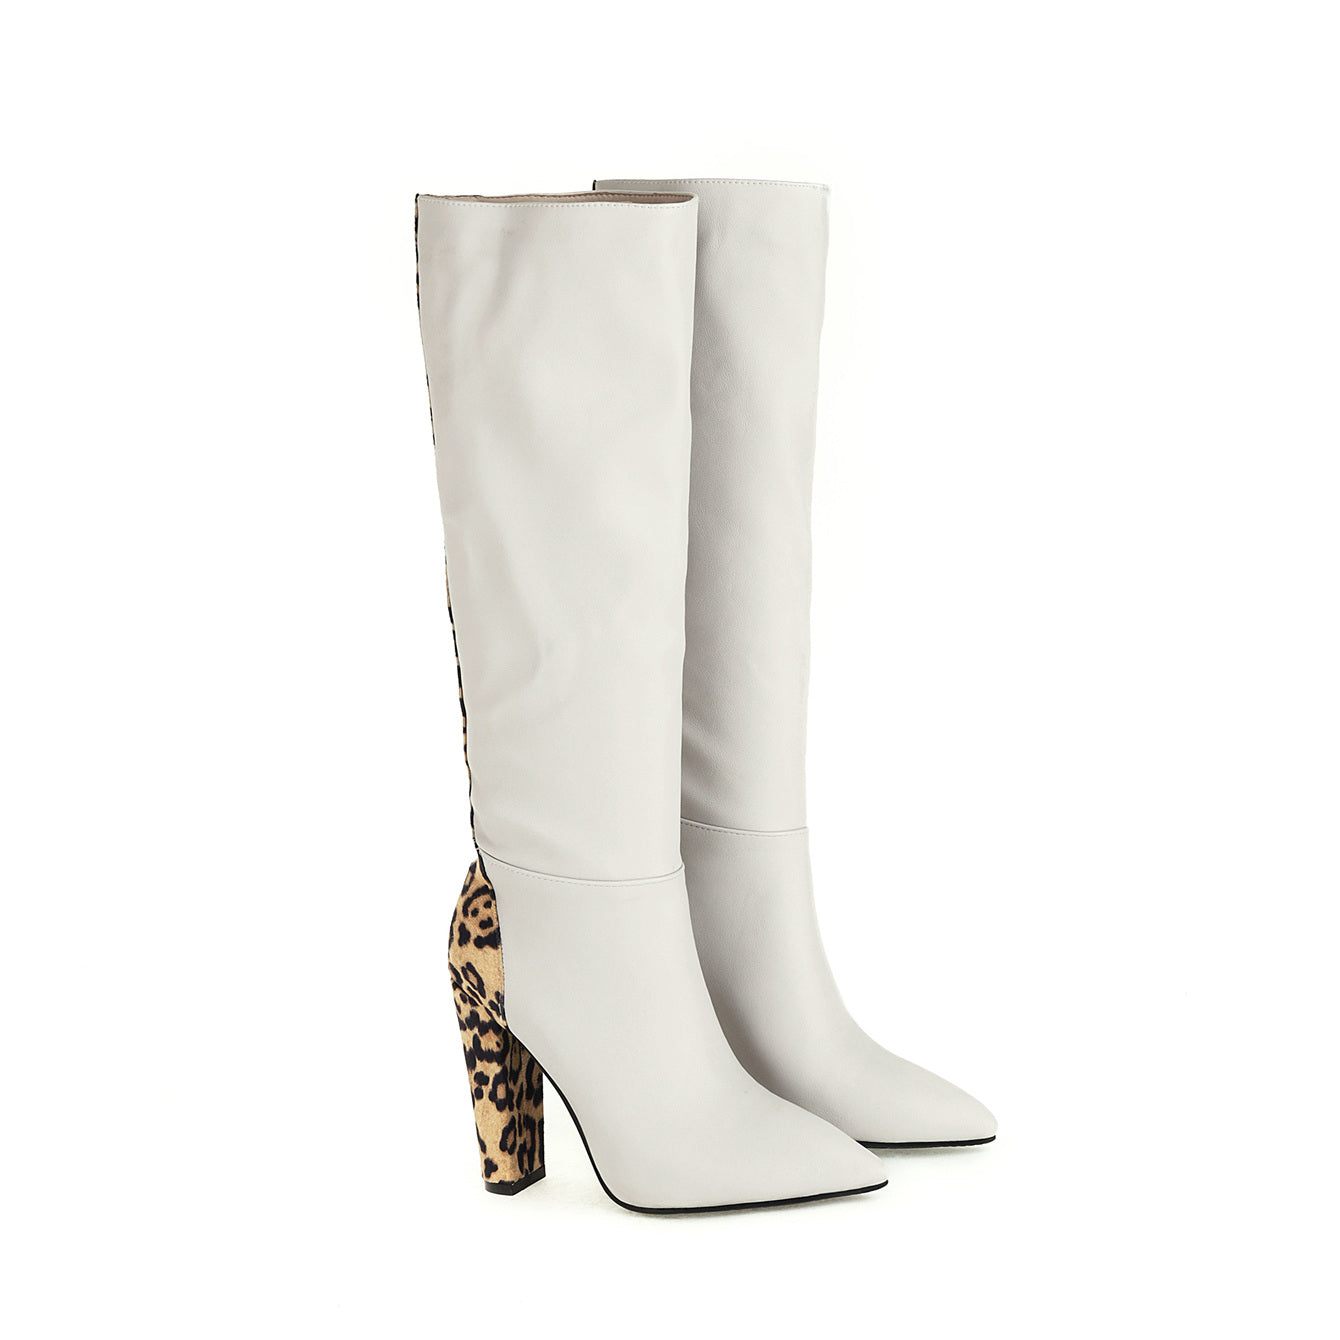 Bigsizeheels Pointed Leopard Print Block Heel Boots -White freeshipping - bigsizeheel®-size5-size15 -All Plus Sizes Available!